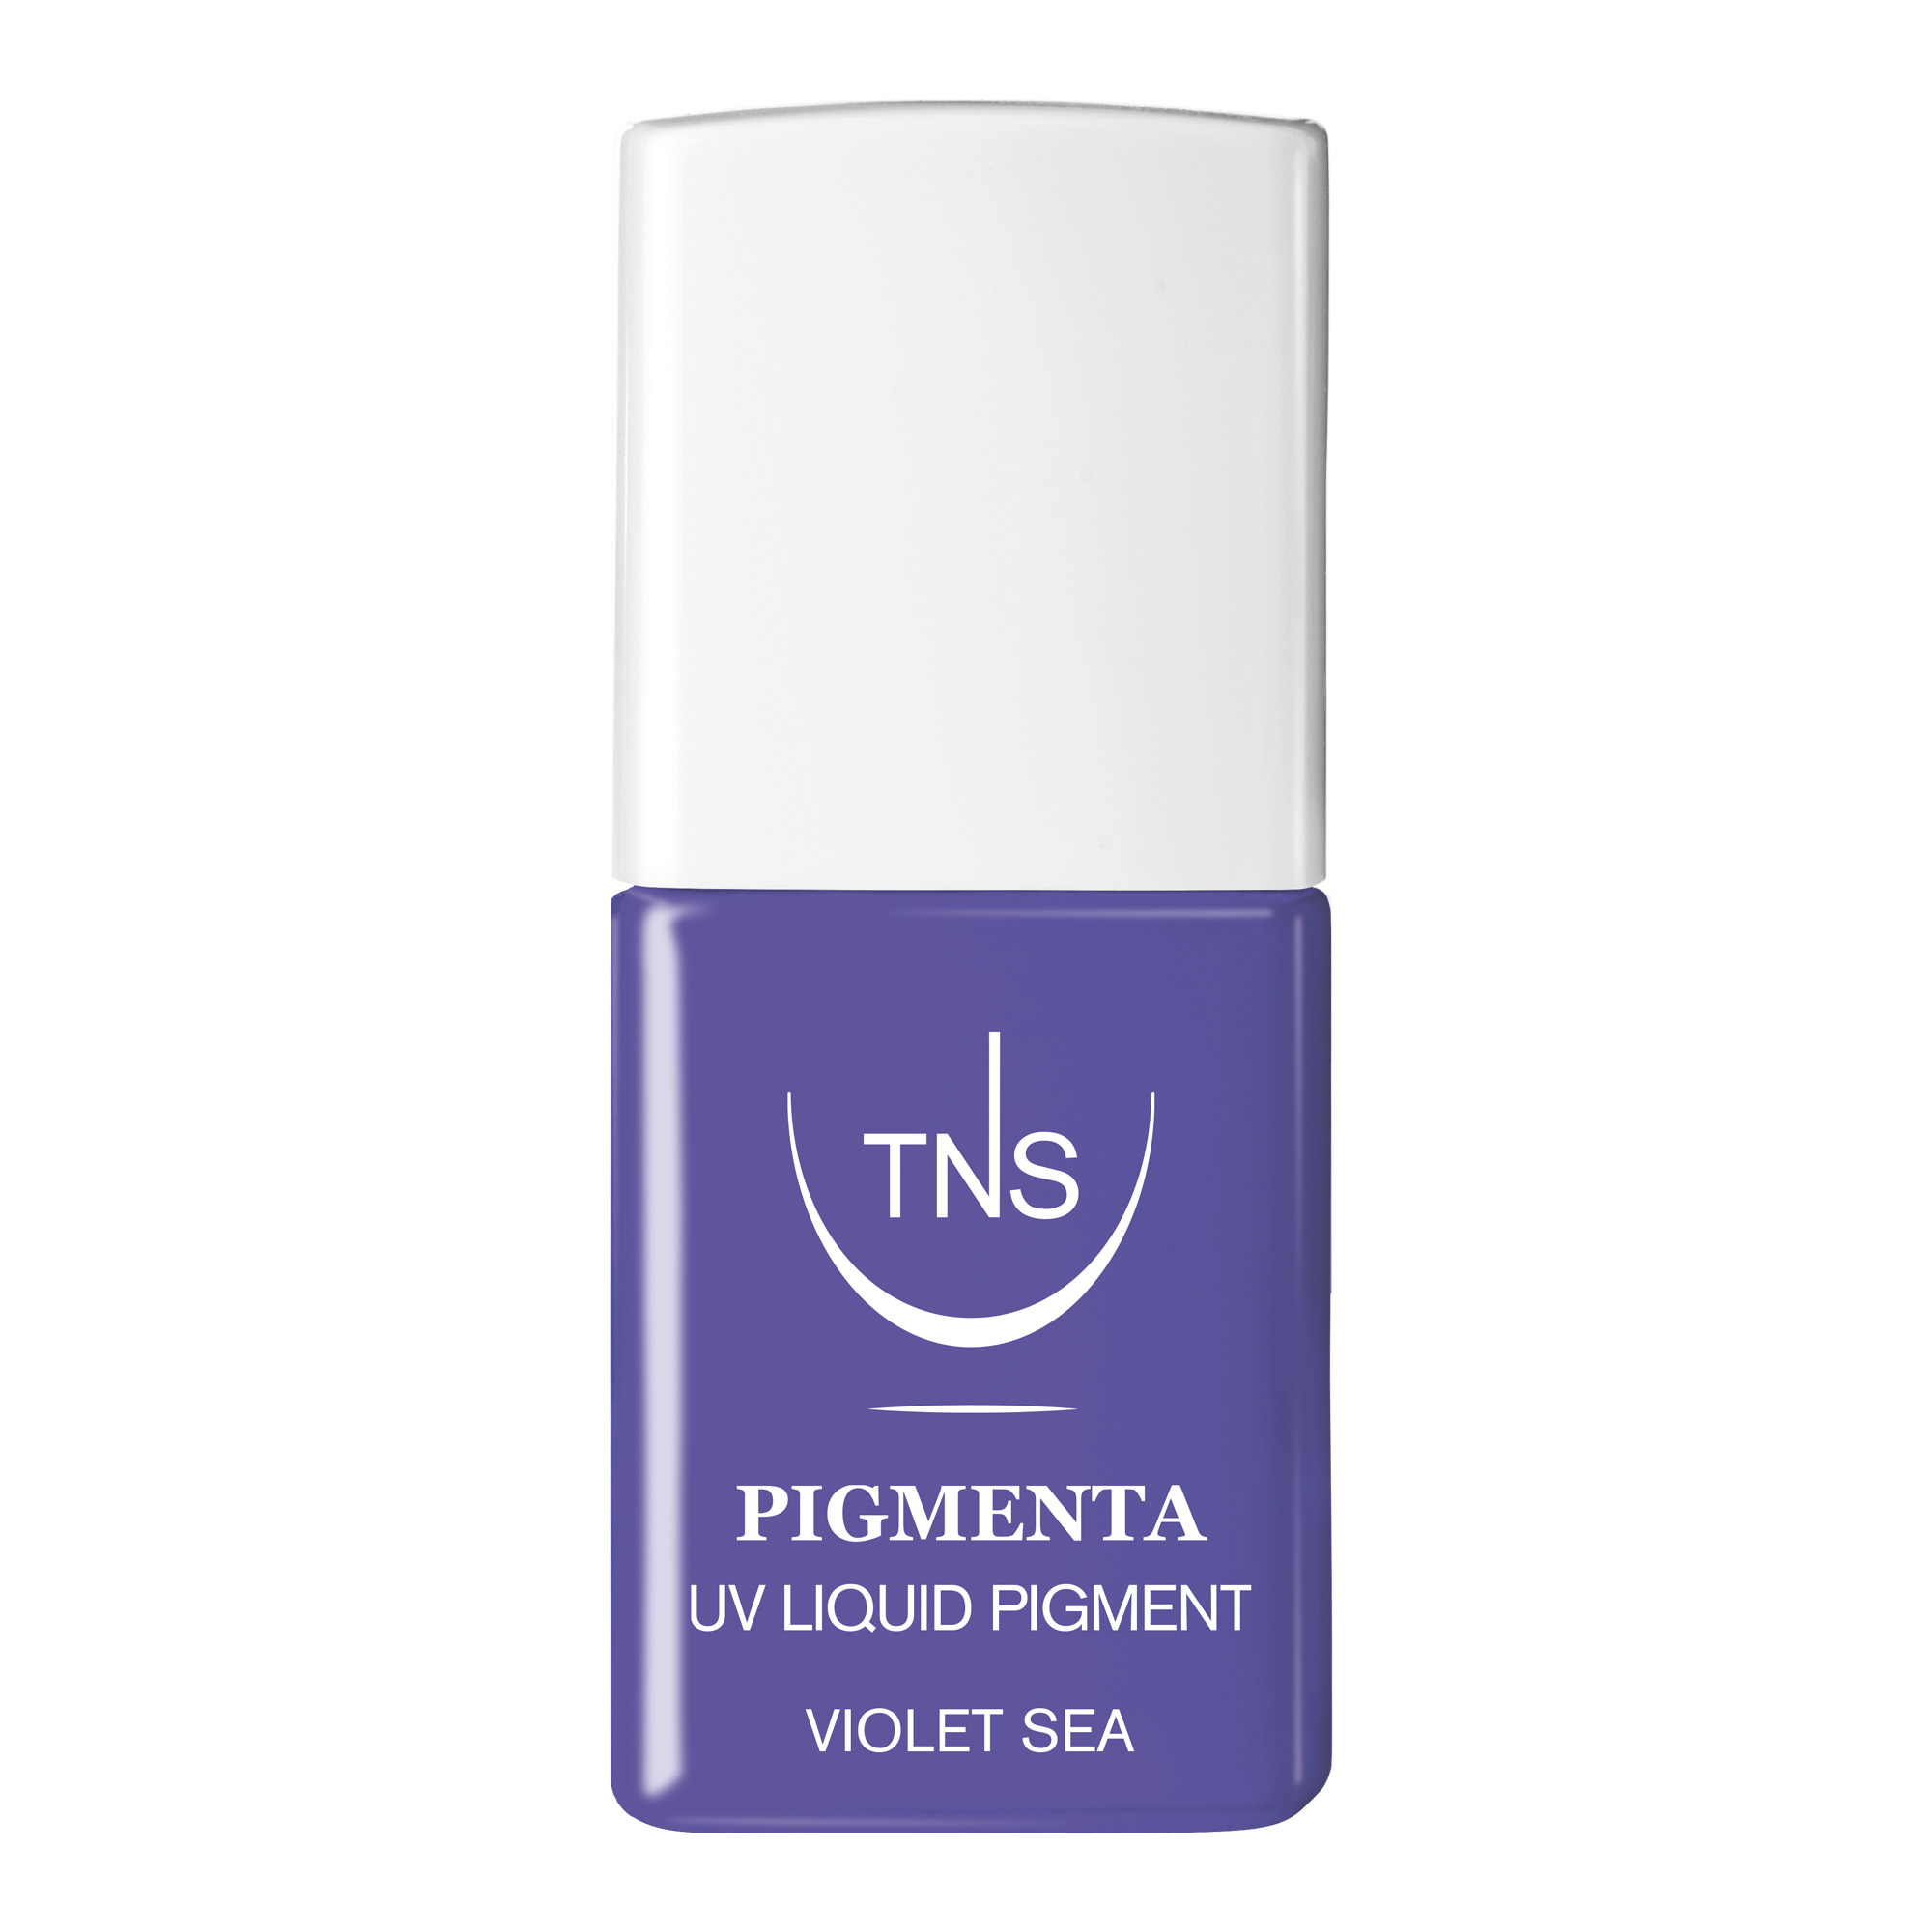 UV Flüssigpigment Violet Sea hellviolett 10 ml Pigmenta TNS